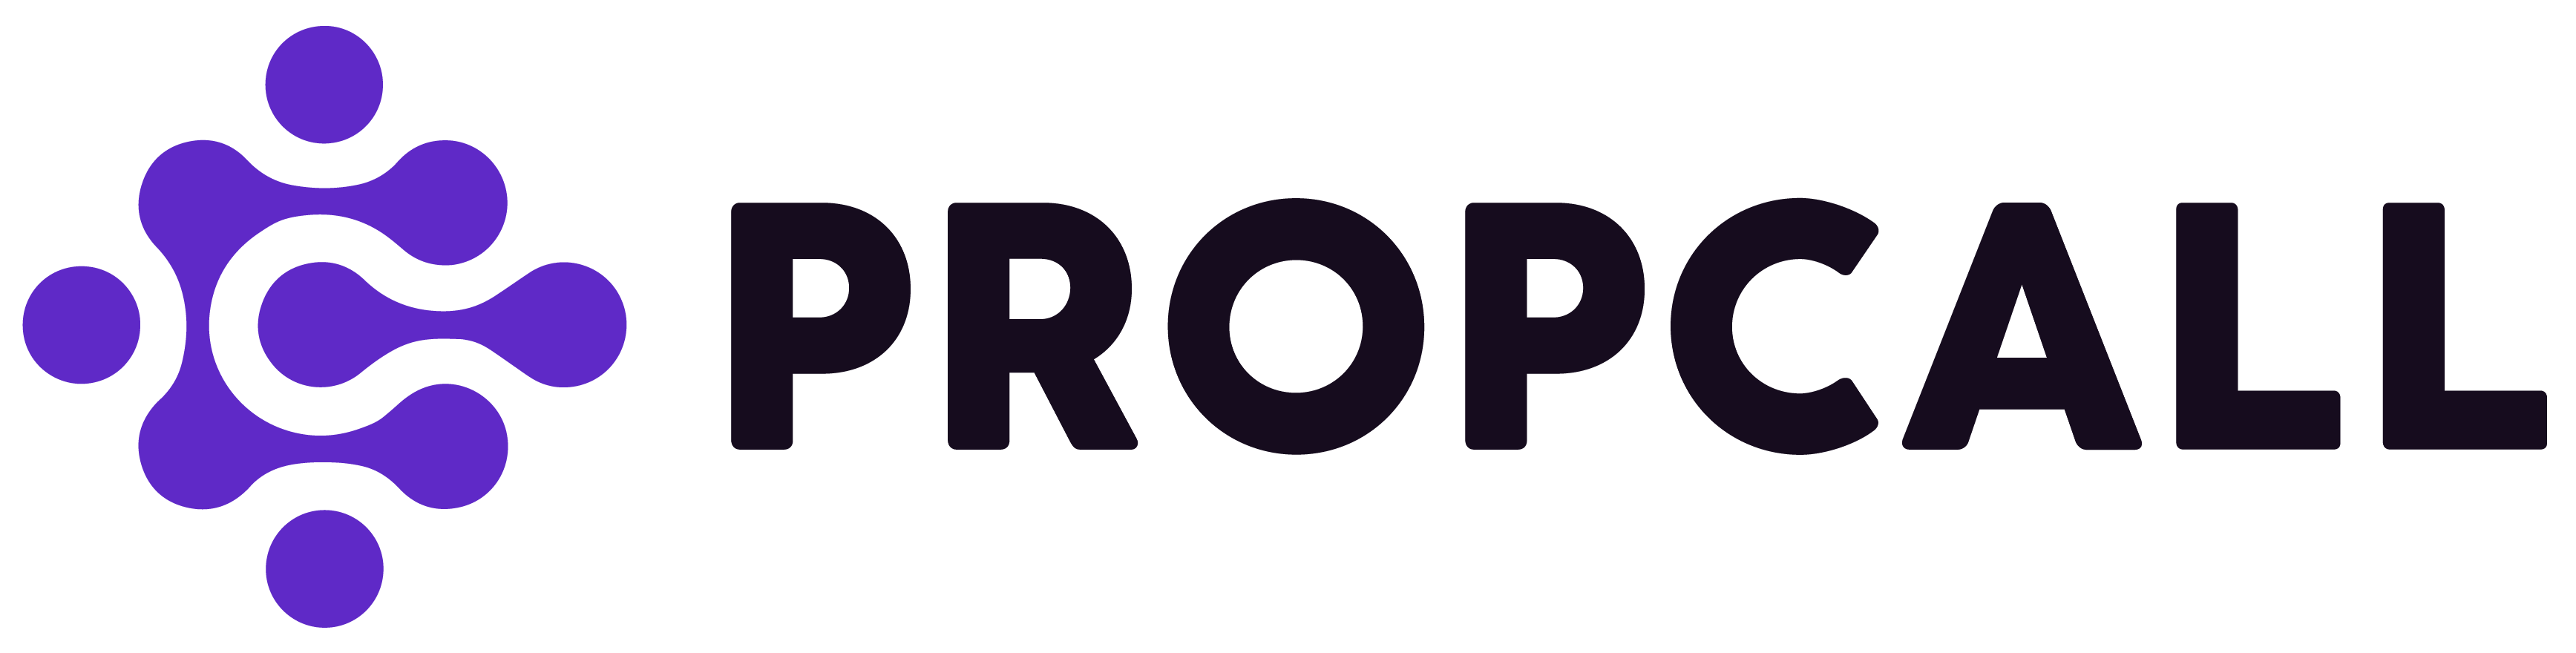 Propcall logo - purple